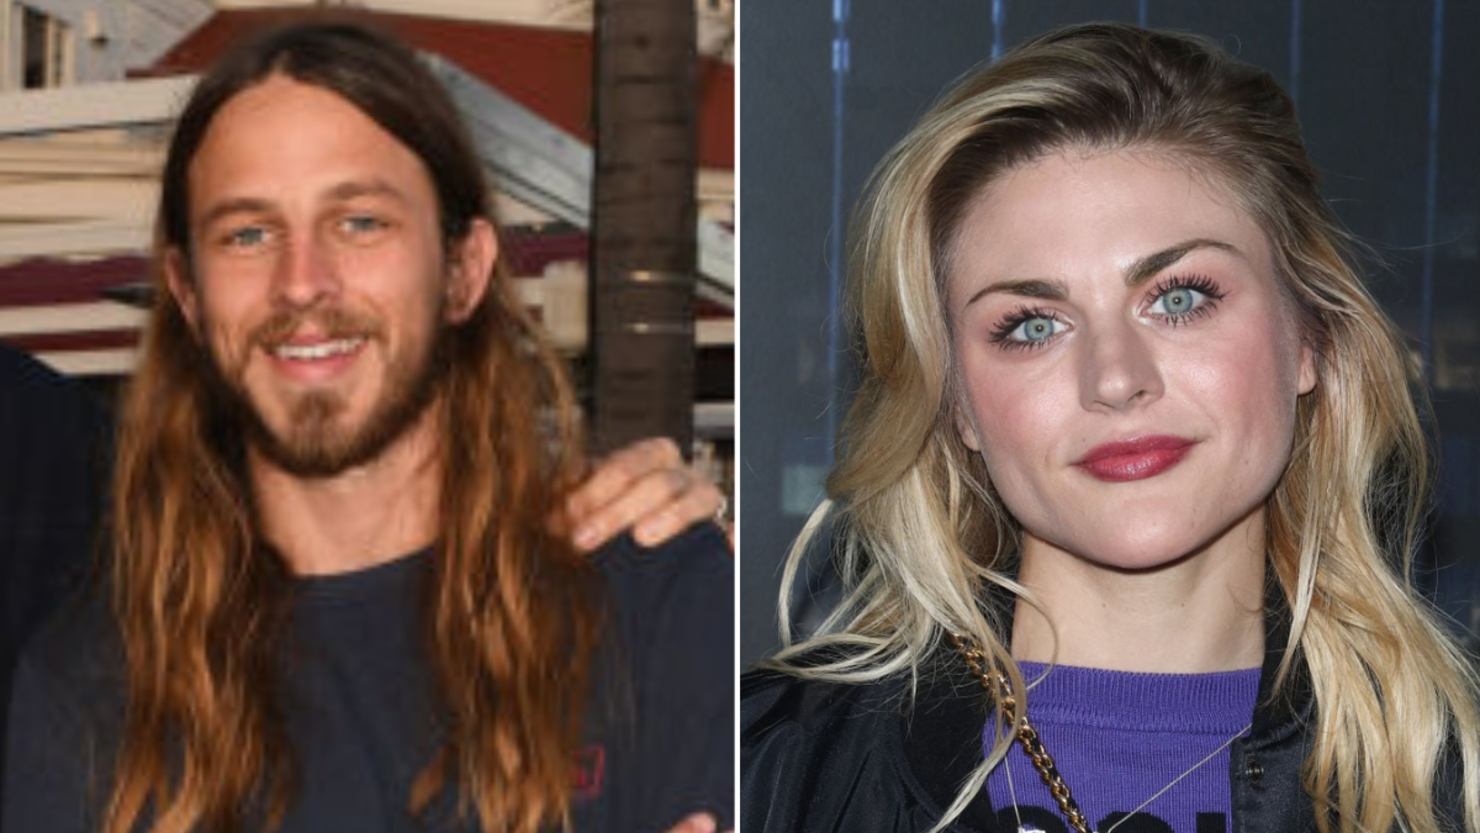 Kurt Cobain's daughter Frances Bean marries Tony Hawk's son Riley